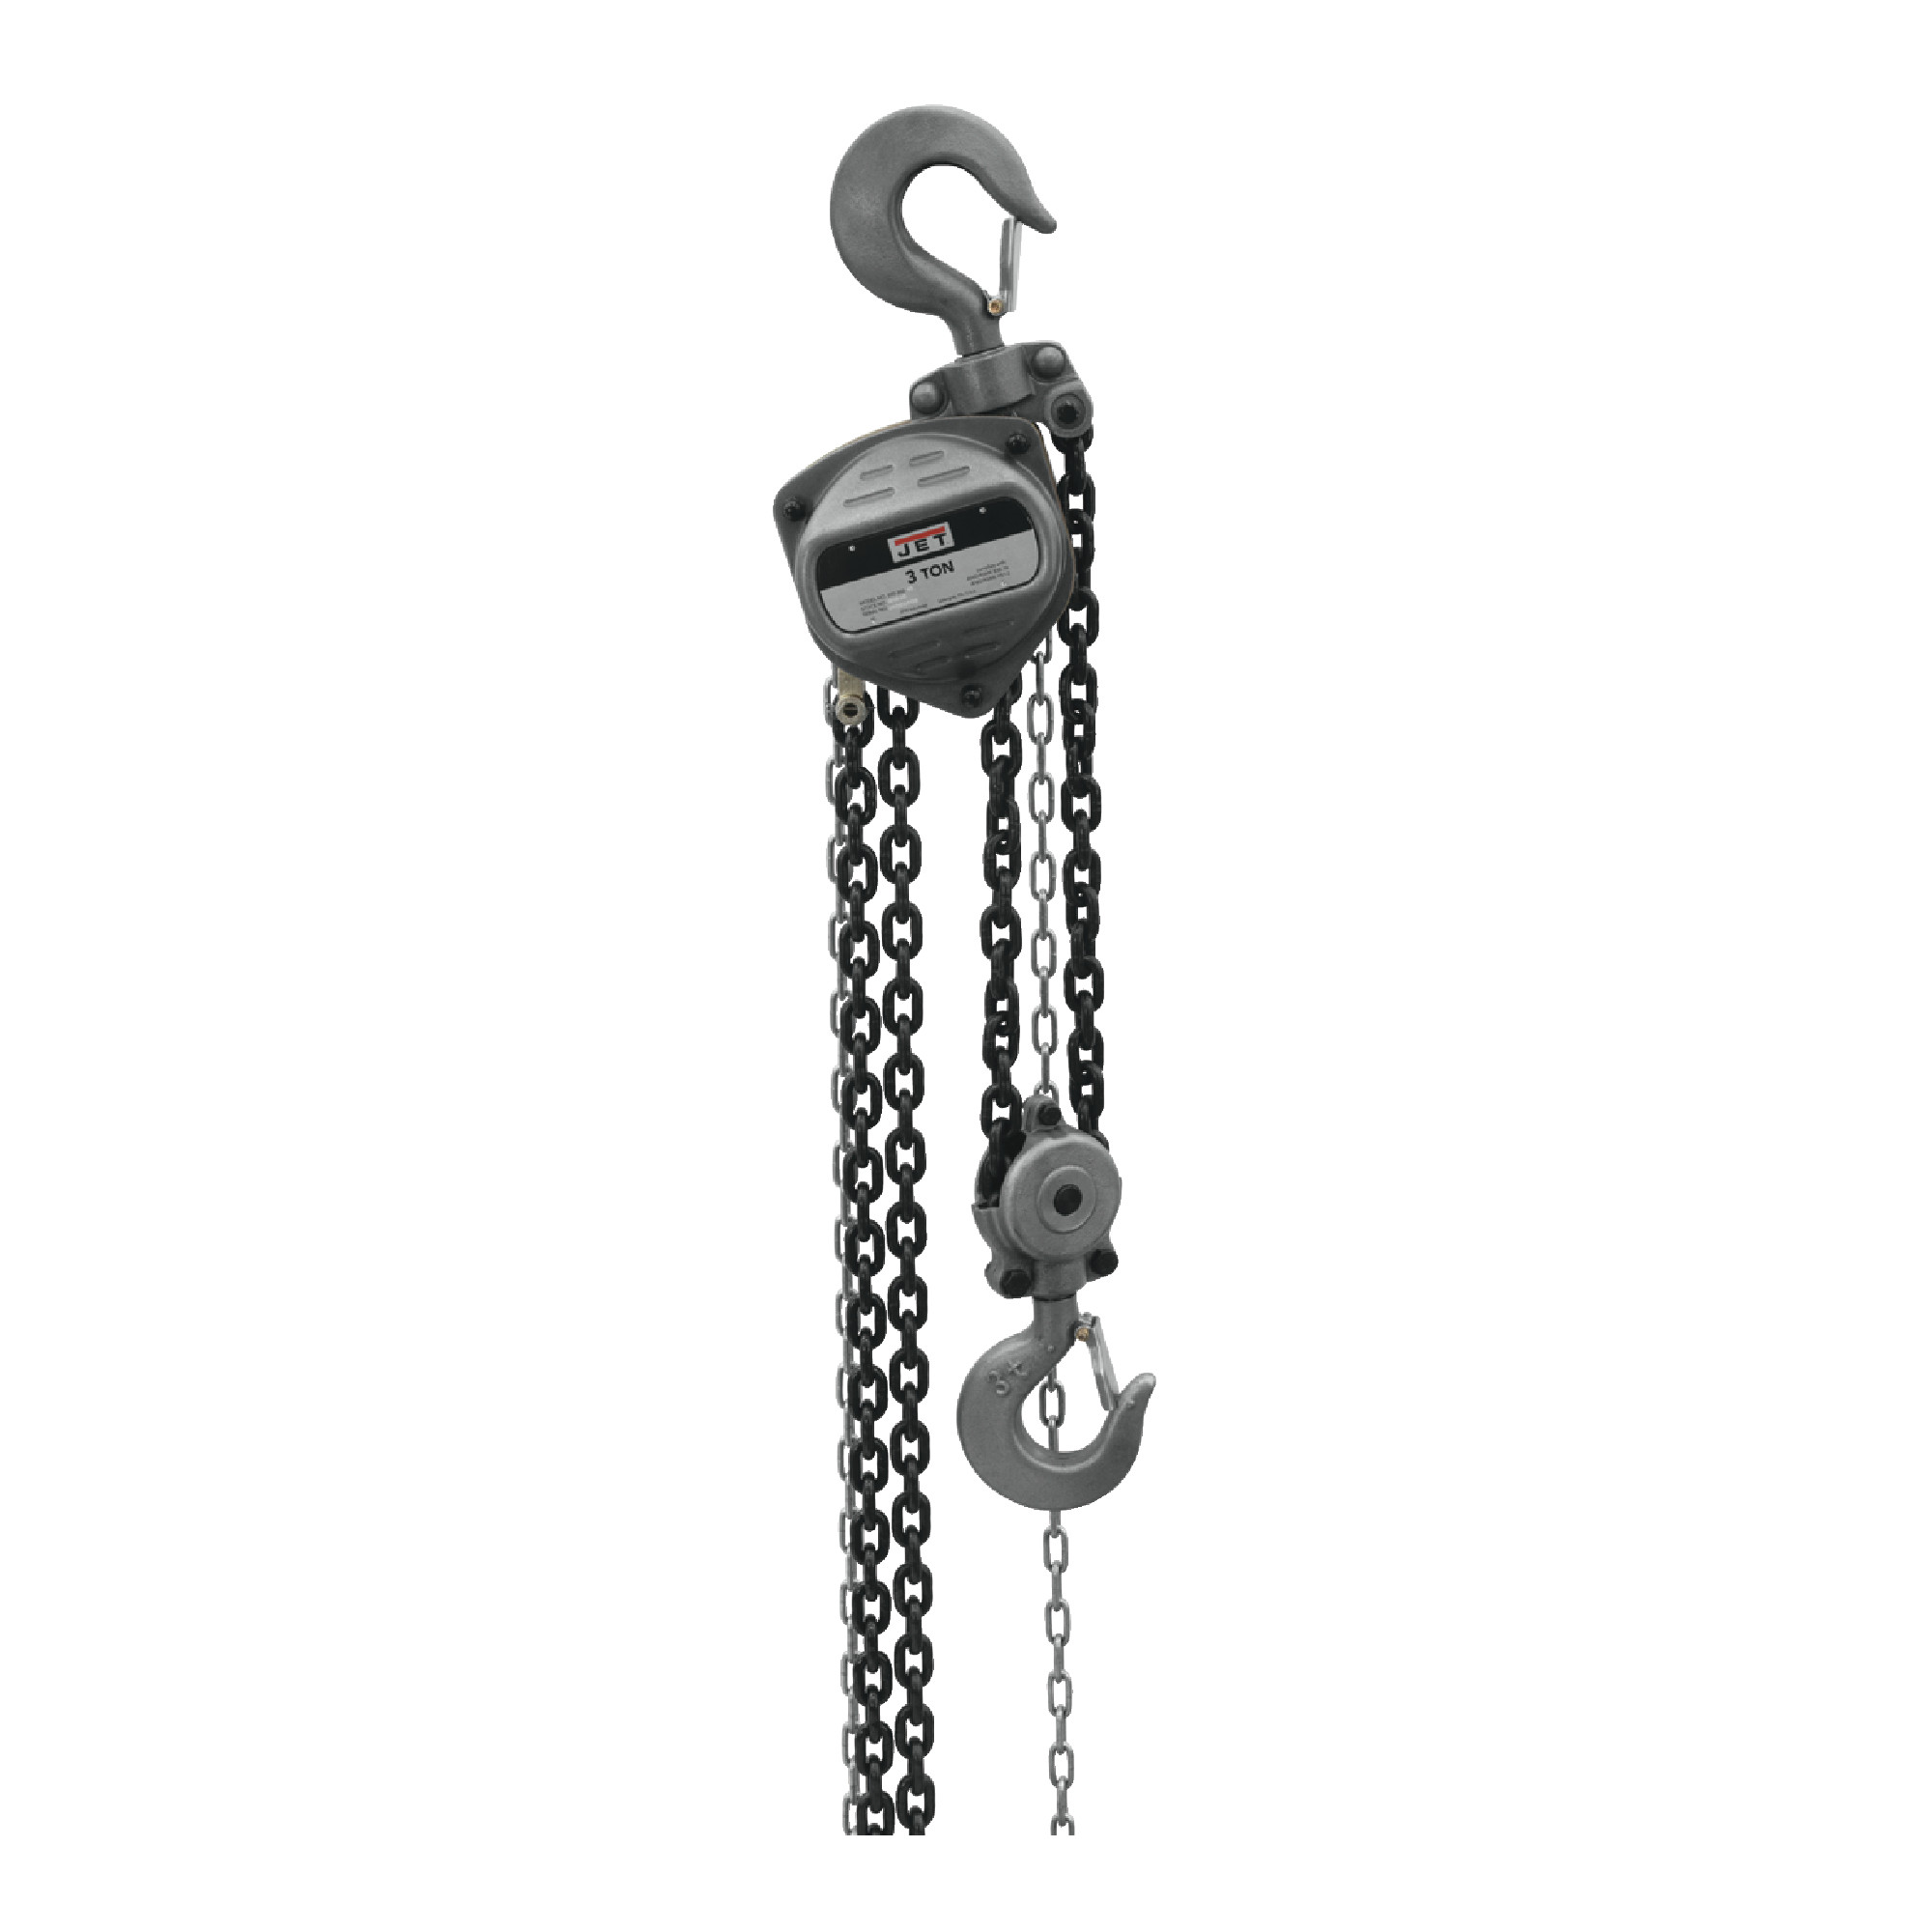 SS90 Hand Chain Hoist